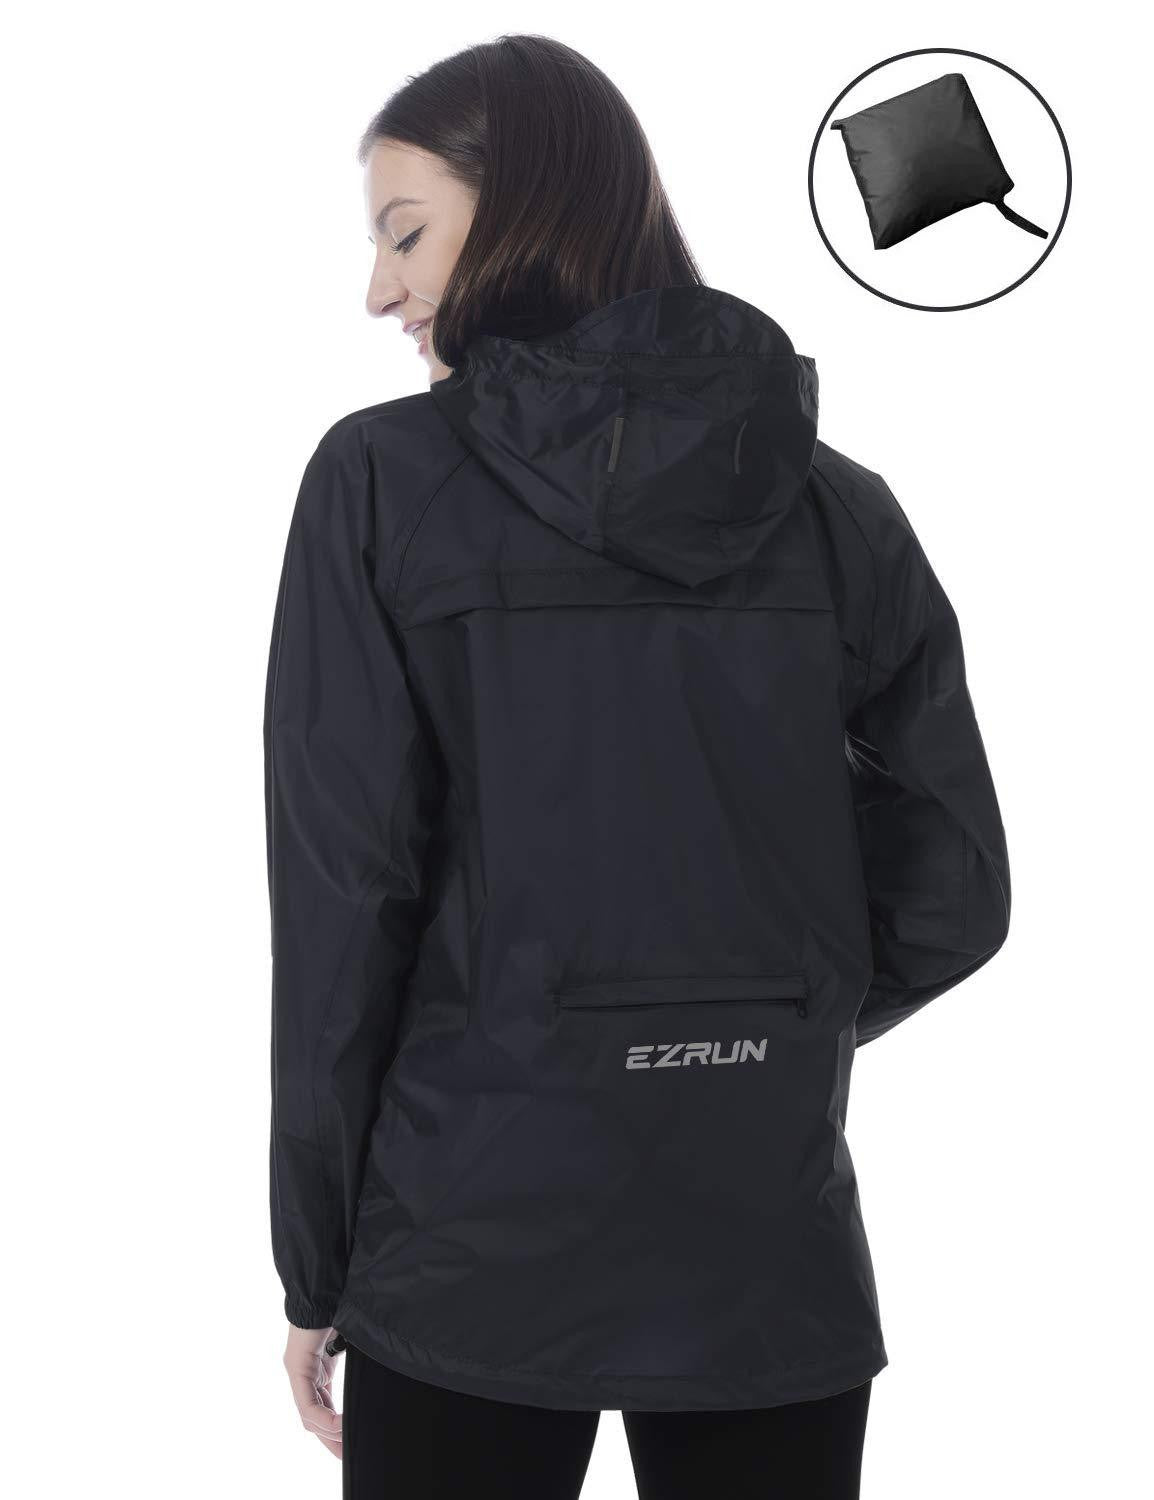 EZRUN Women's Lightweight Waterproof Packable Hooded Raincoat